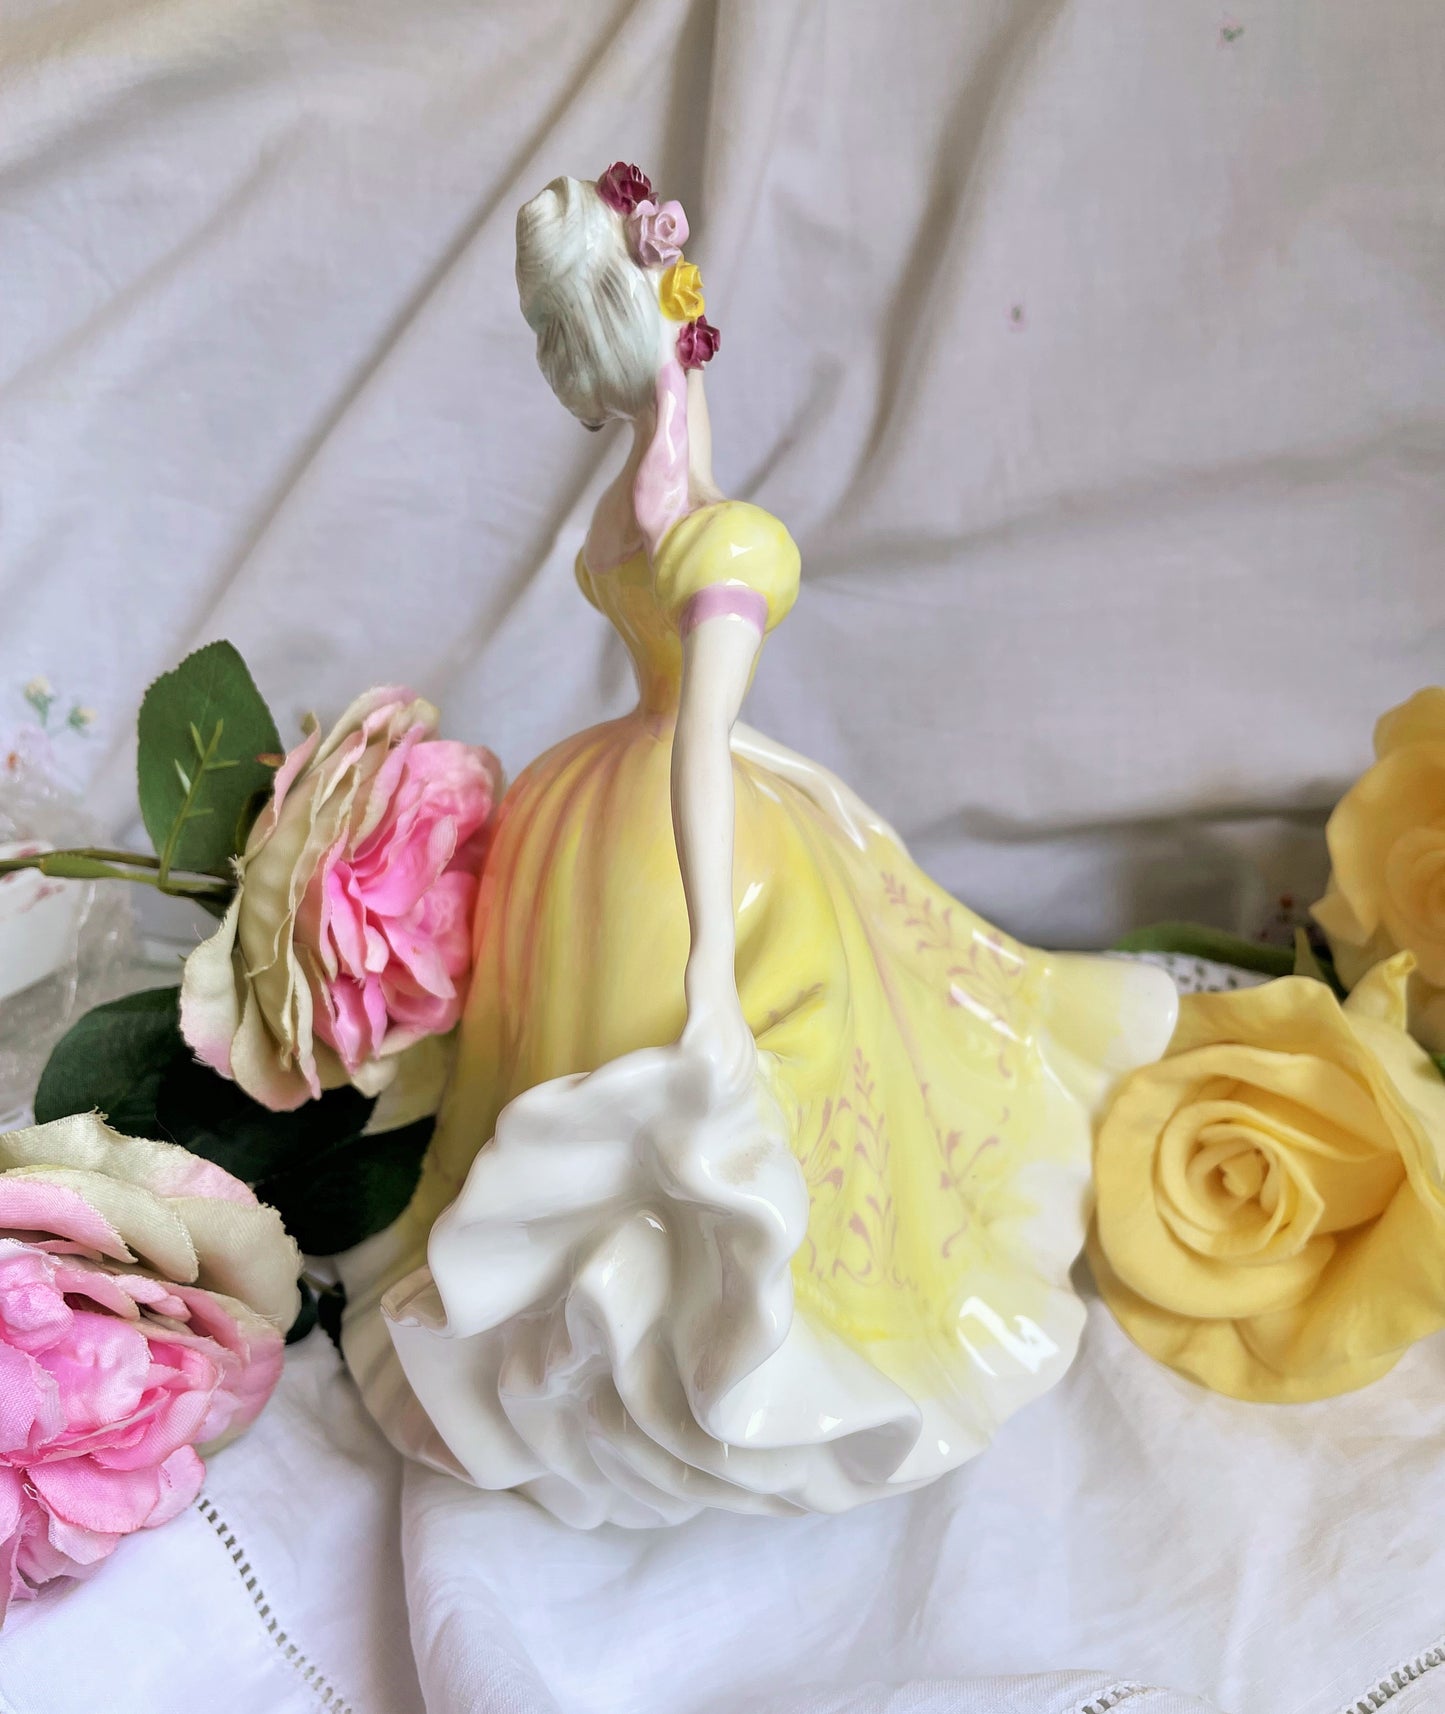 Ninette Royal Doulton Figurine